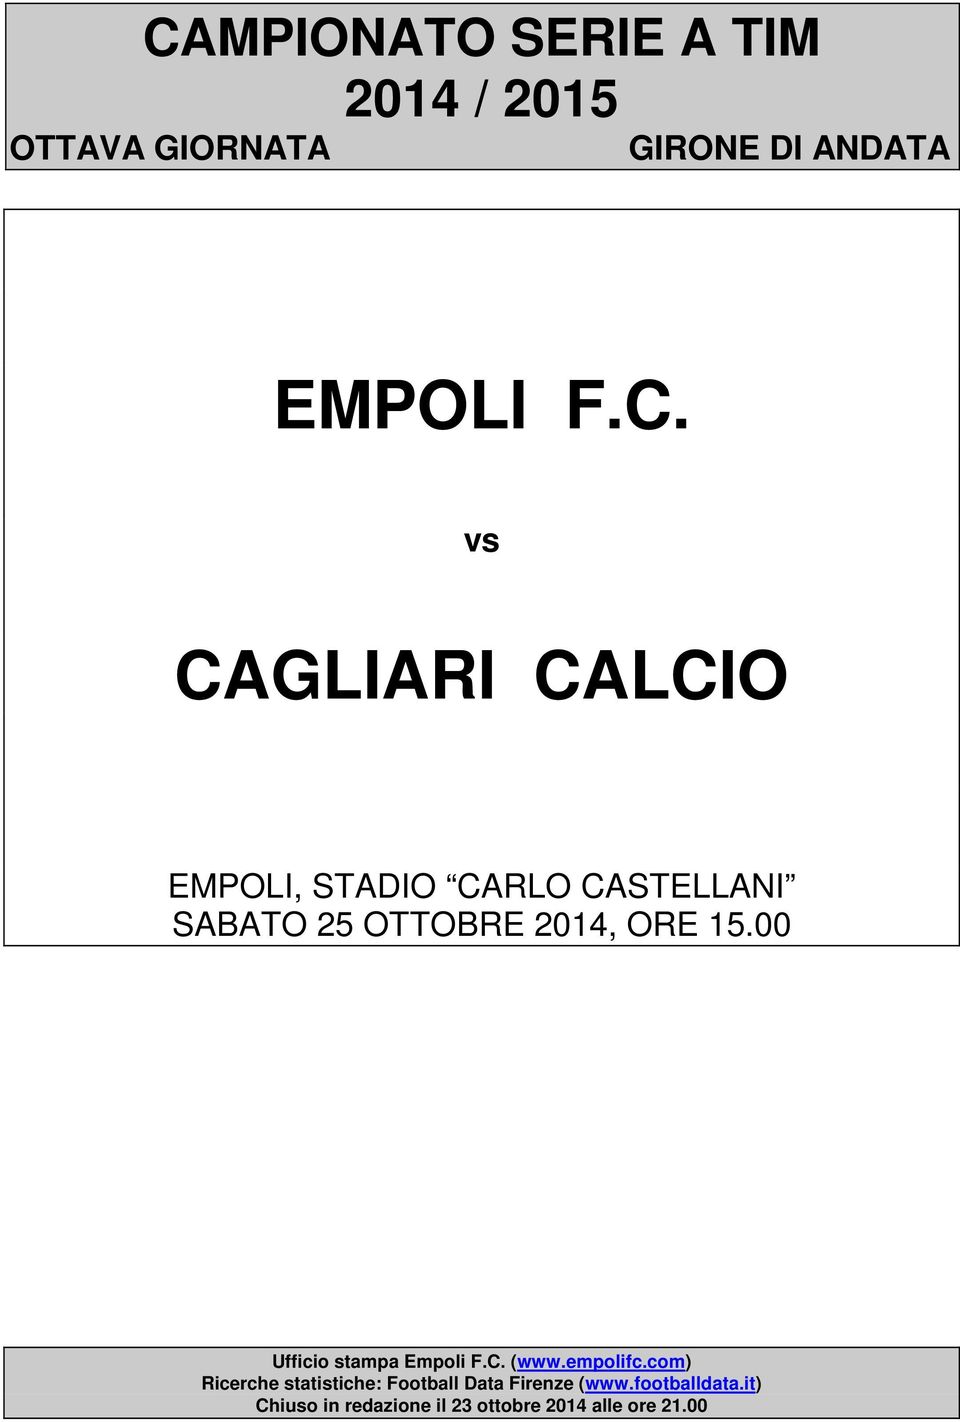 Ufficio stampa Empoli F.C. (www.empolifc.